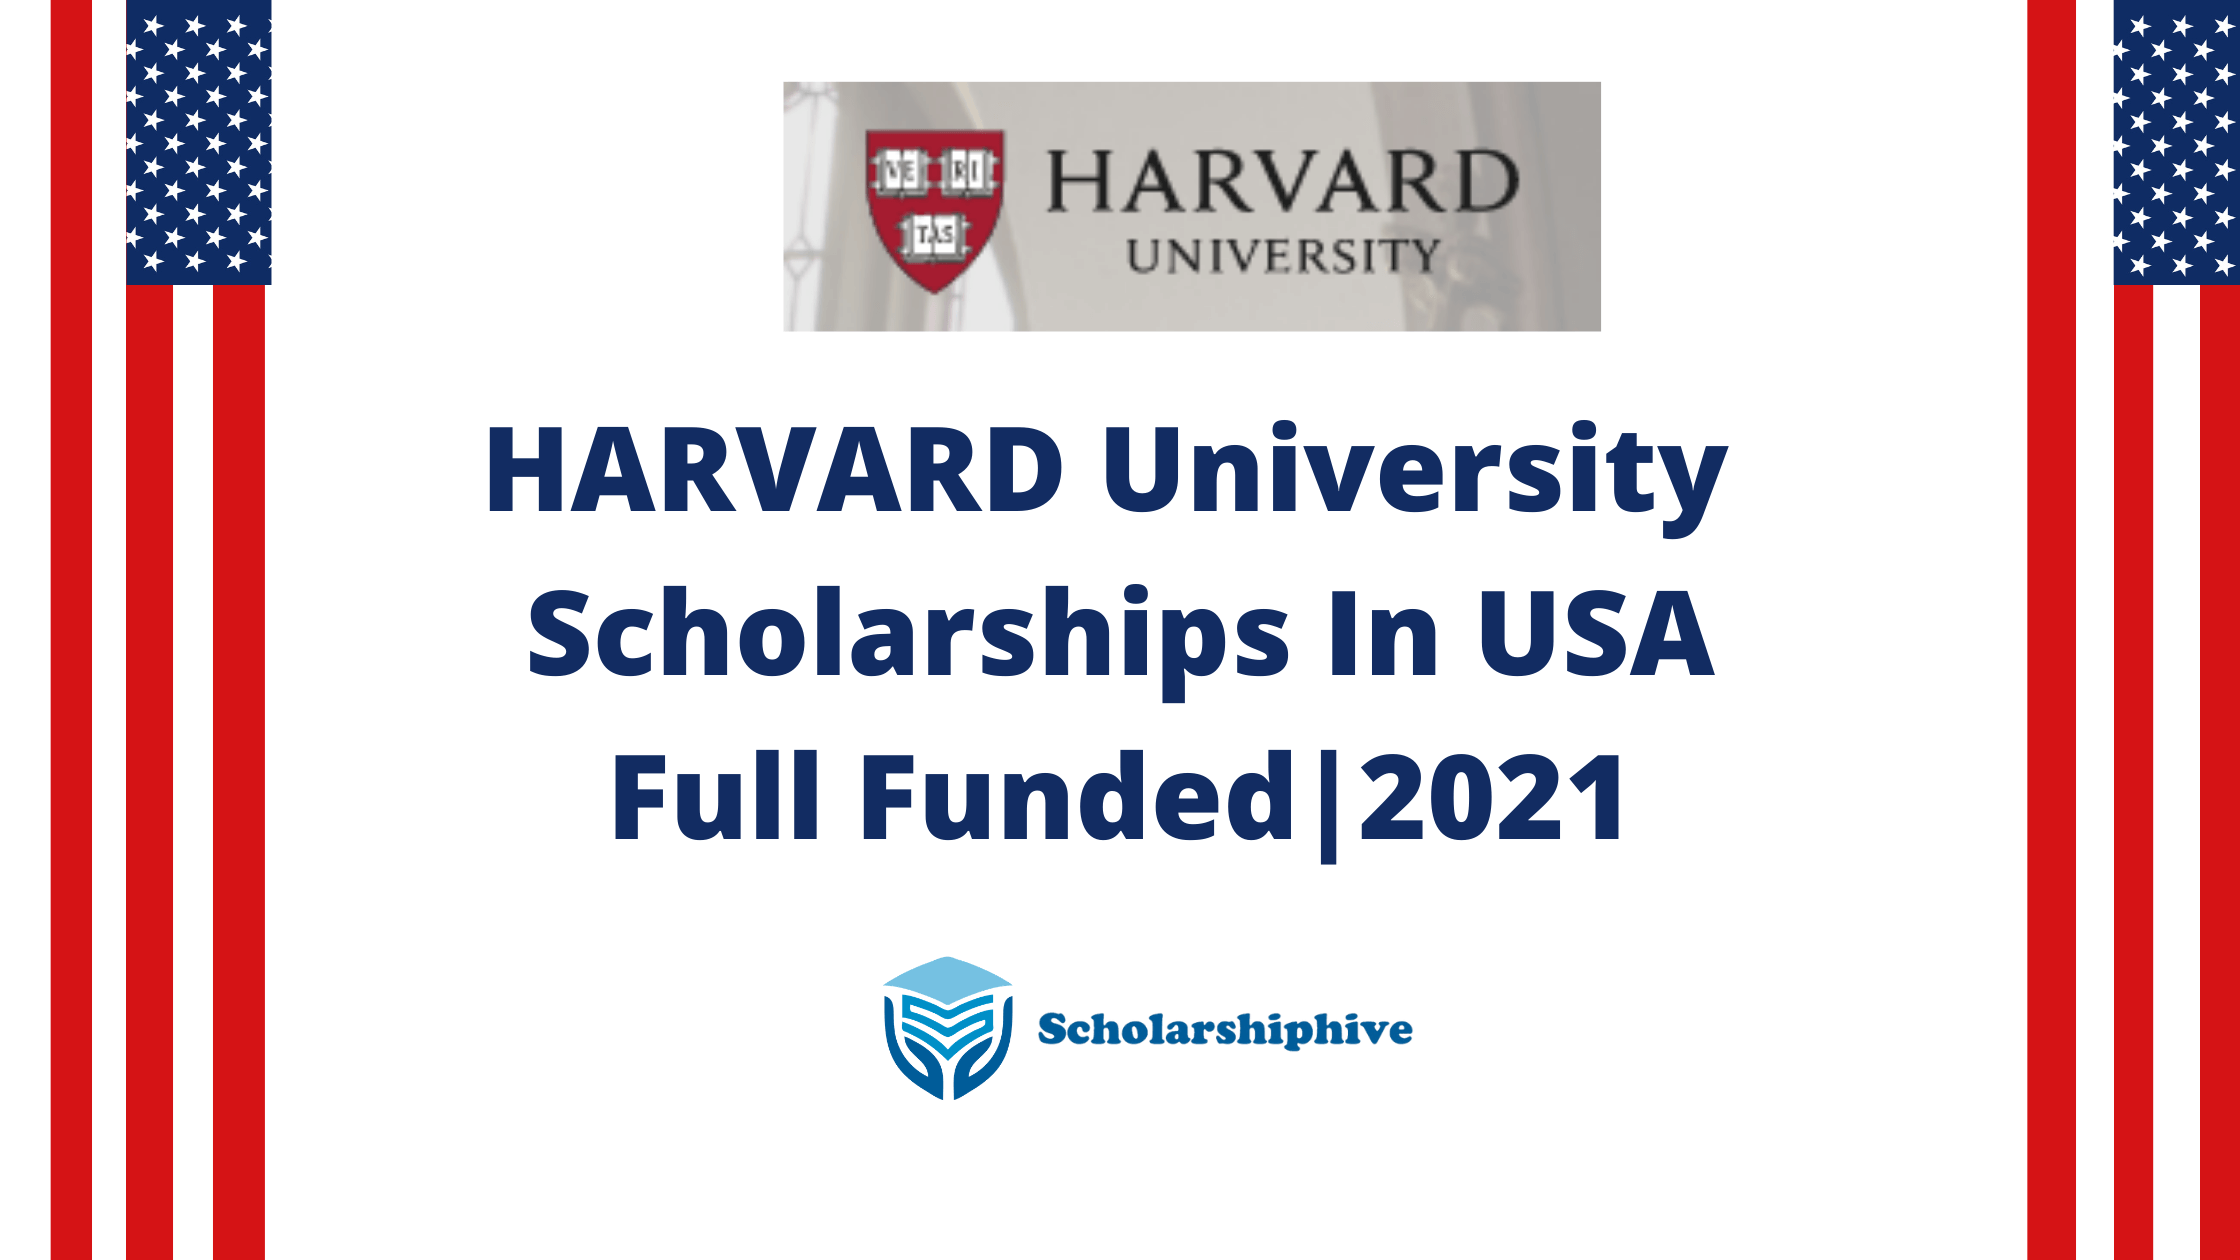 HARVARD UNIVERSITY SCHOLARSHIPS USA Scholarshiphive